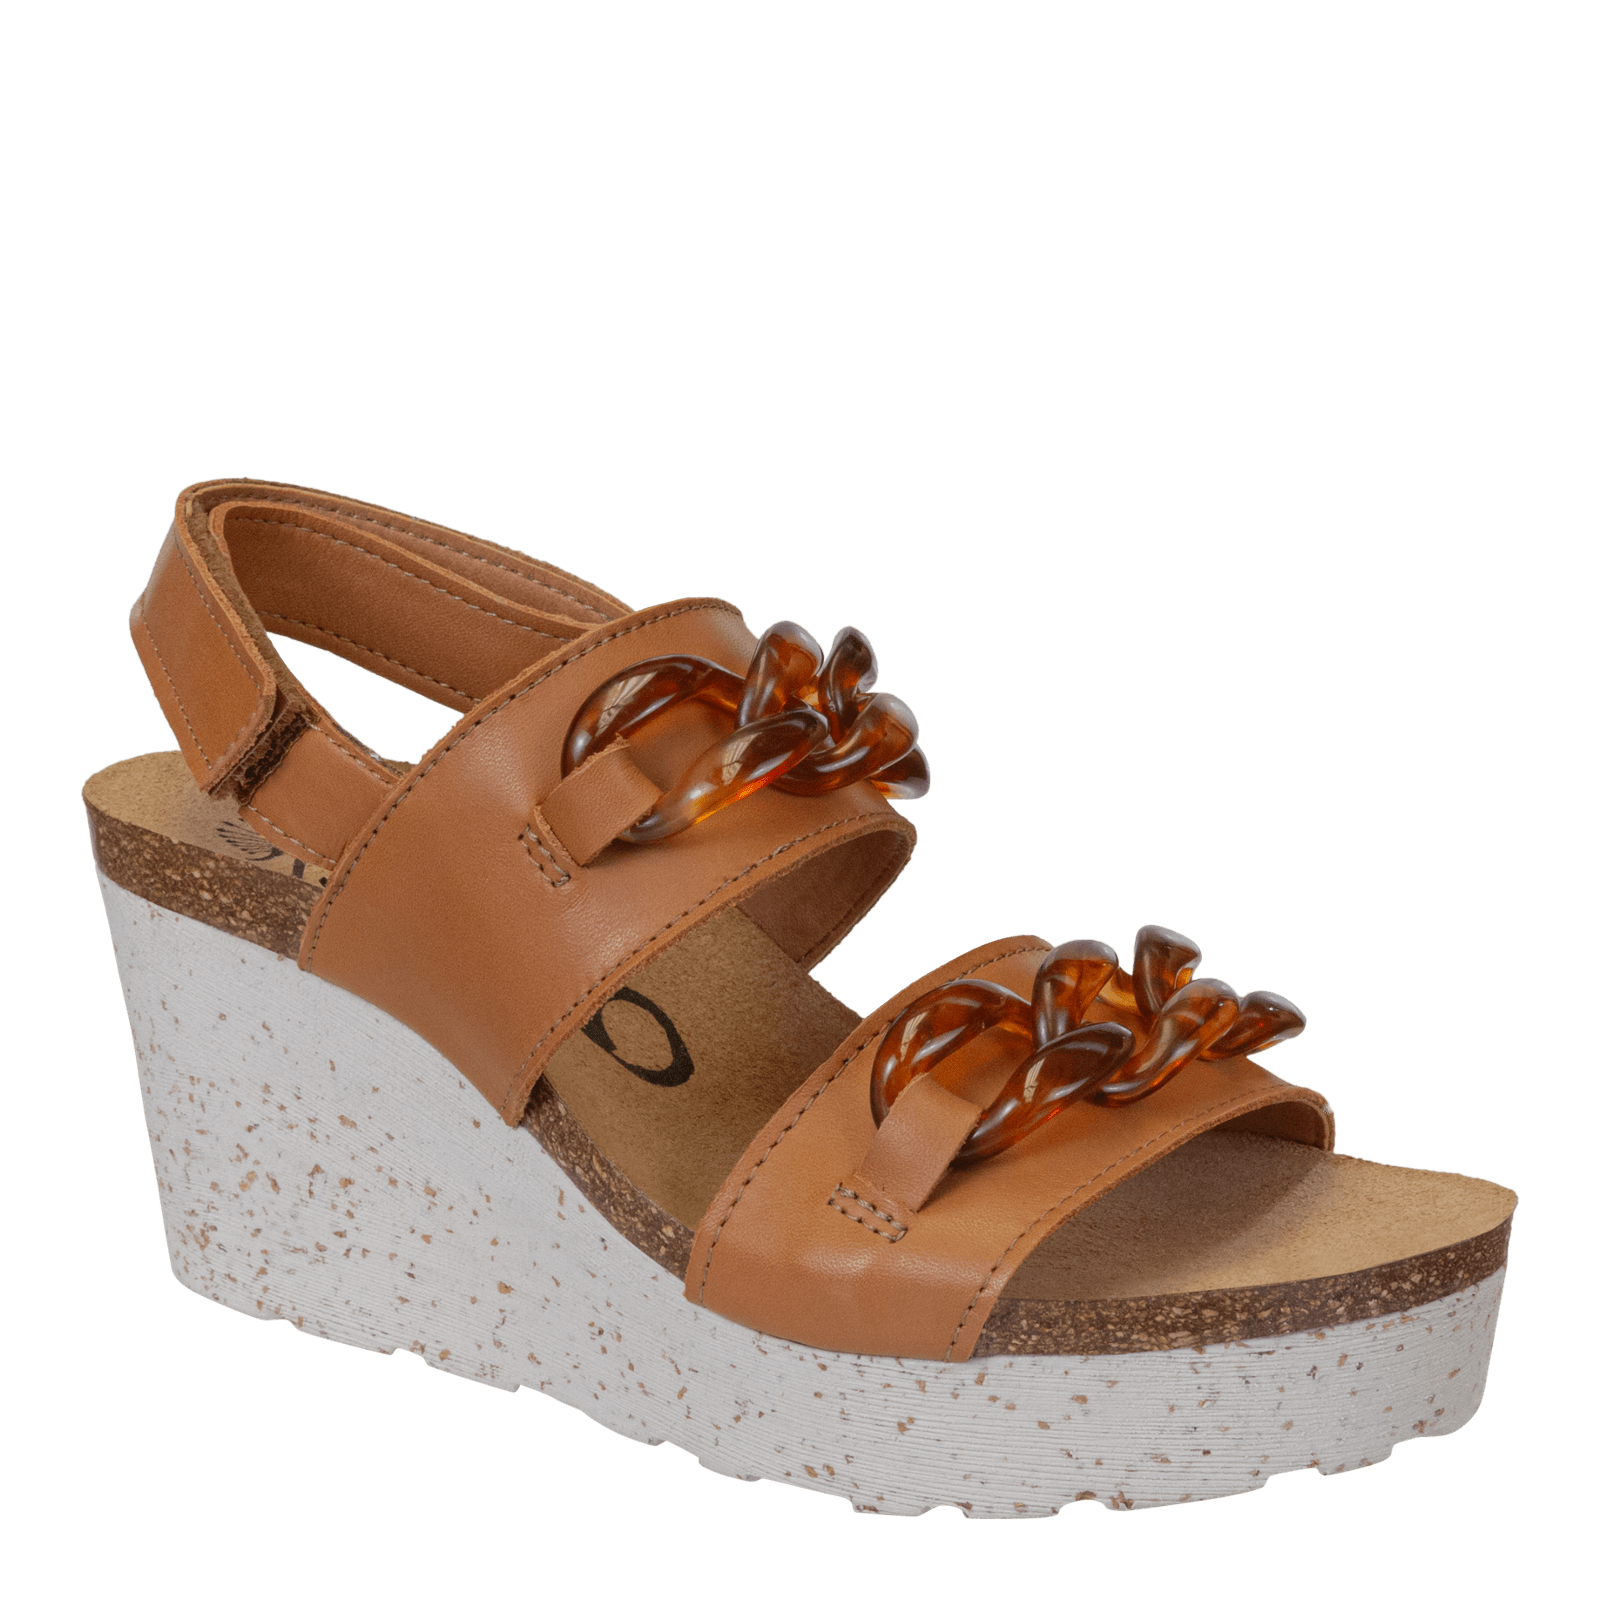 OTBT - FAIR ISLE in CAMEL Wedge Sandals WOMEN FOOTWEAR OTBT 